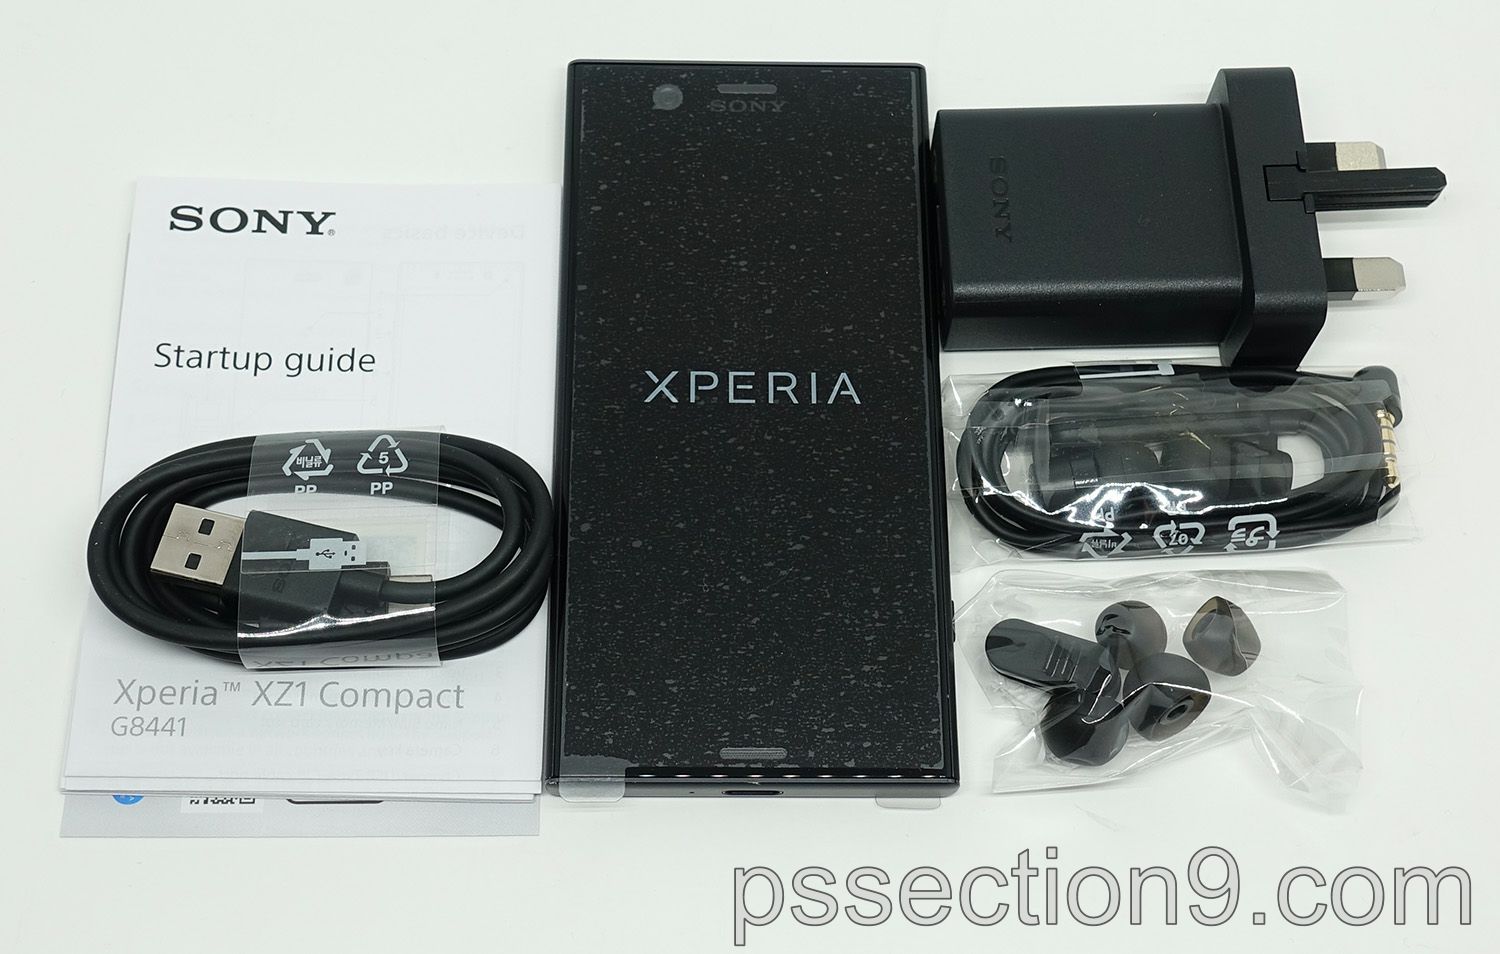 SIMフリー版(海外版) Xperia XZ1 Compact(G8441) レビュー。高スペック 